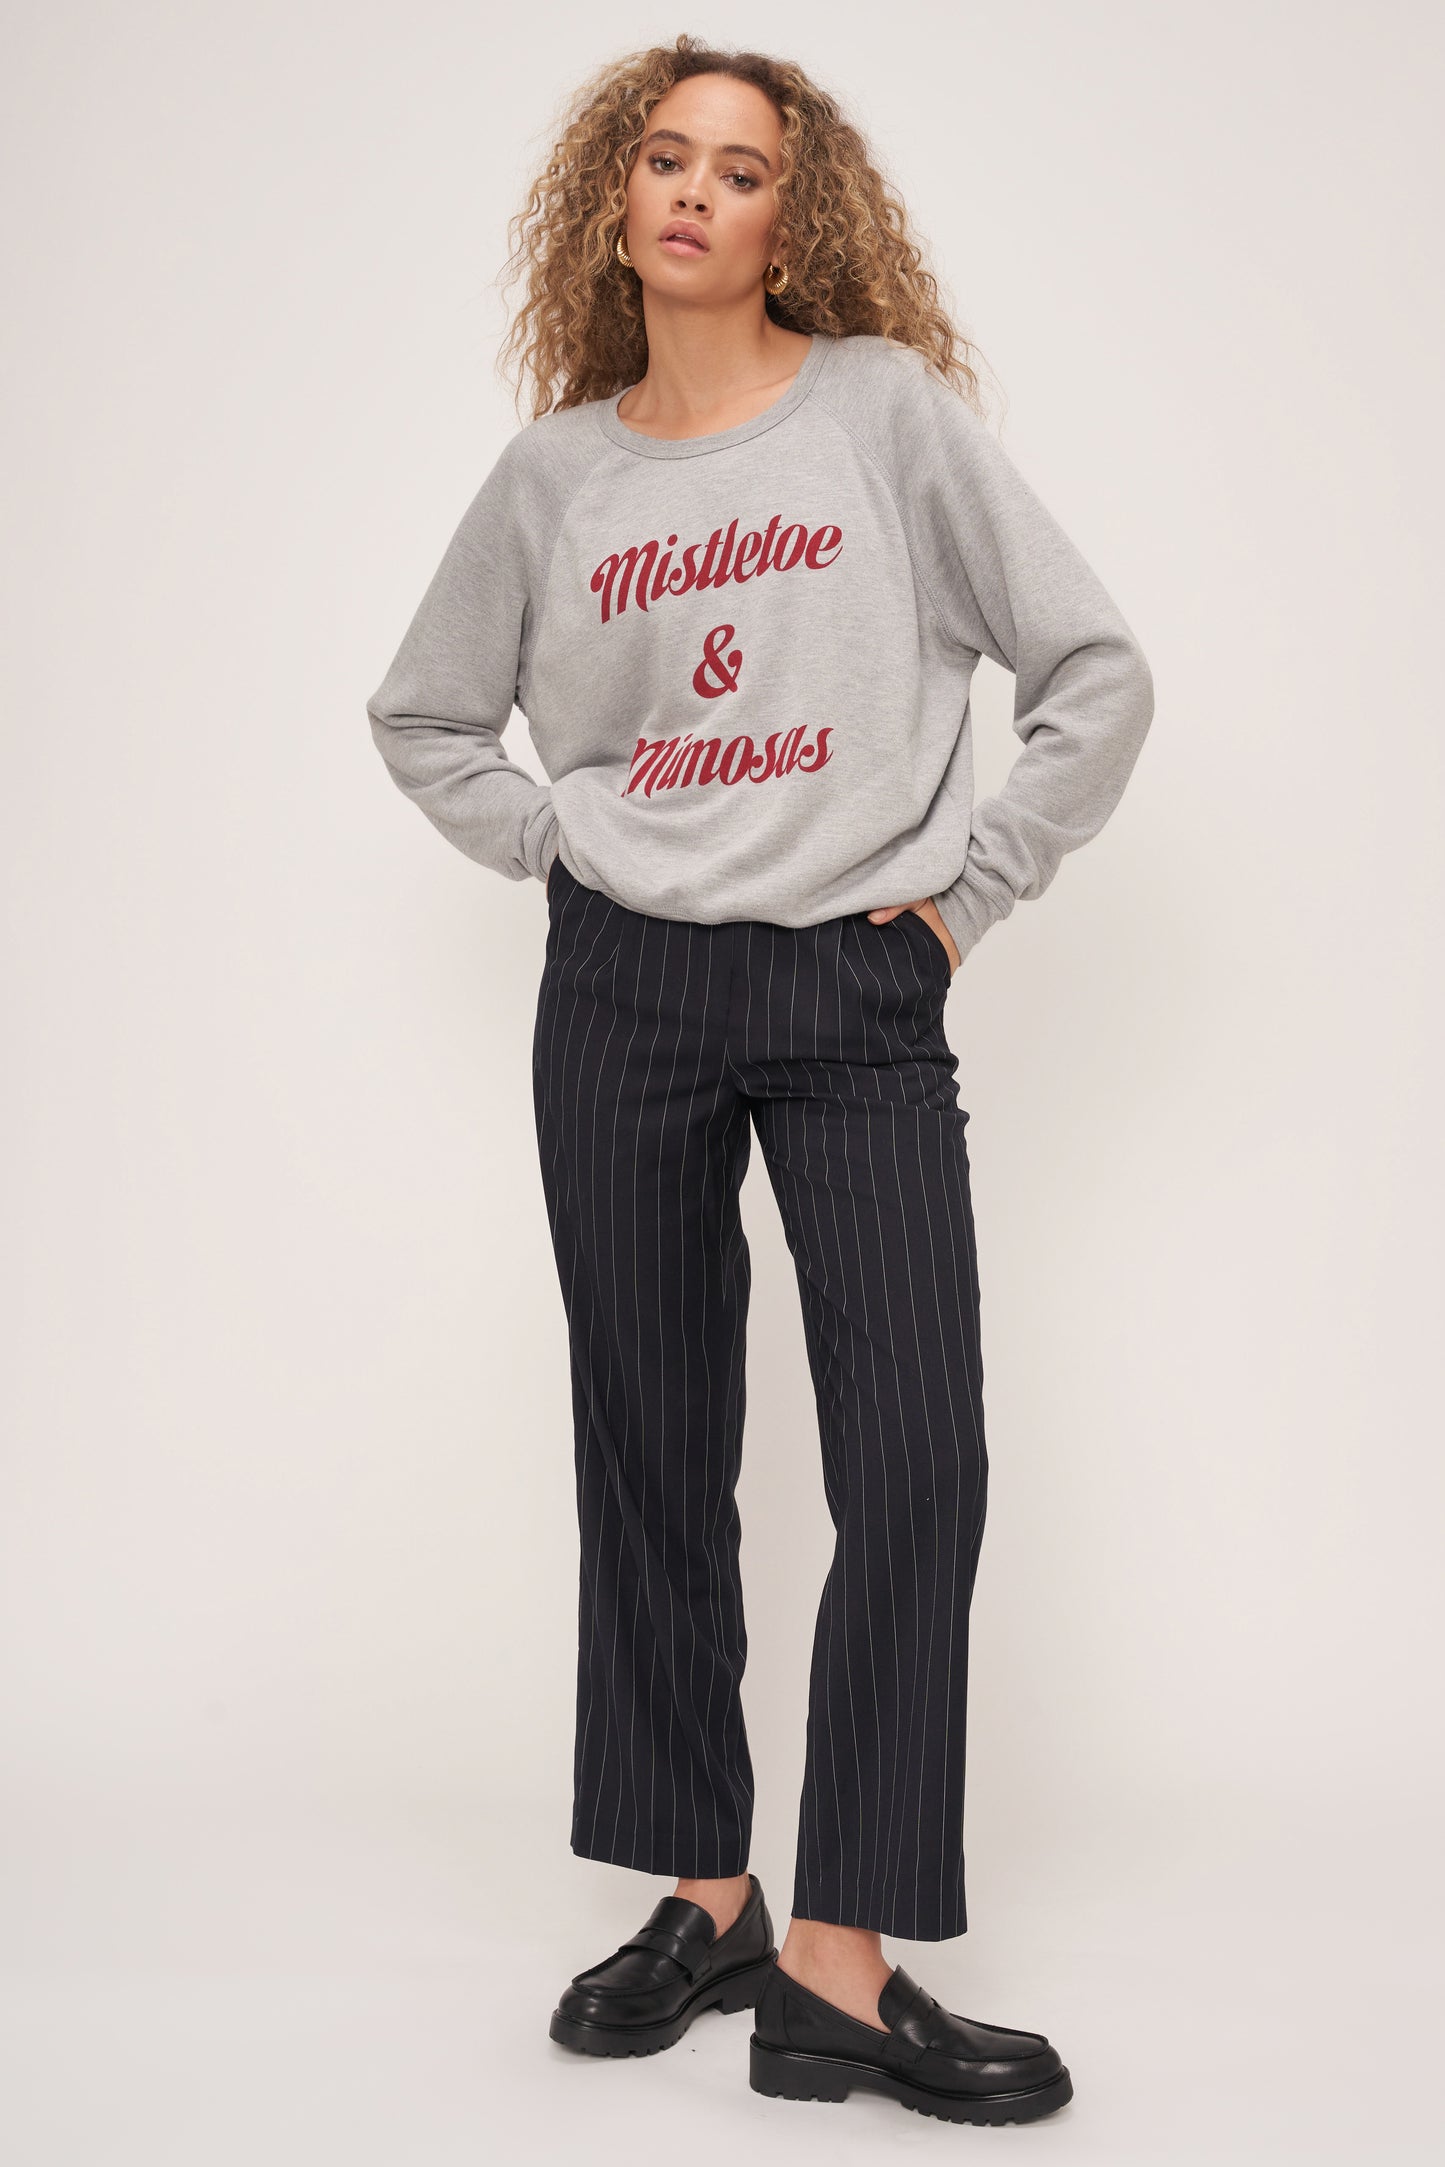 Heather Grey Mistletoe And Mimosas/Hot Cocoa Reversible Sweatshirt